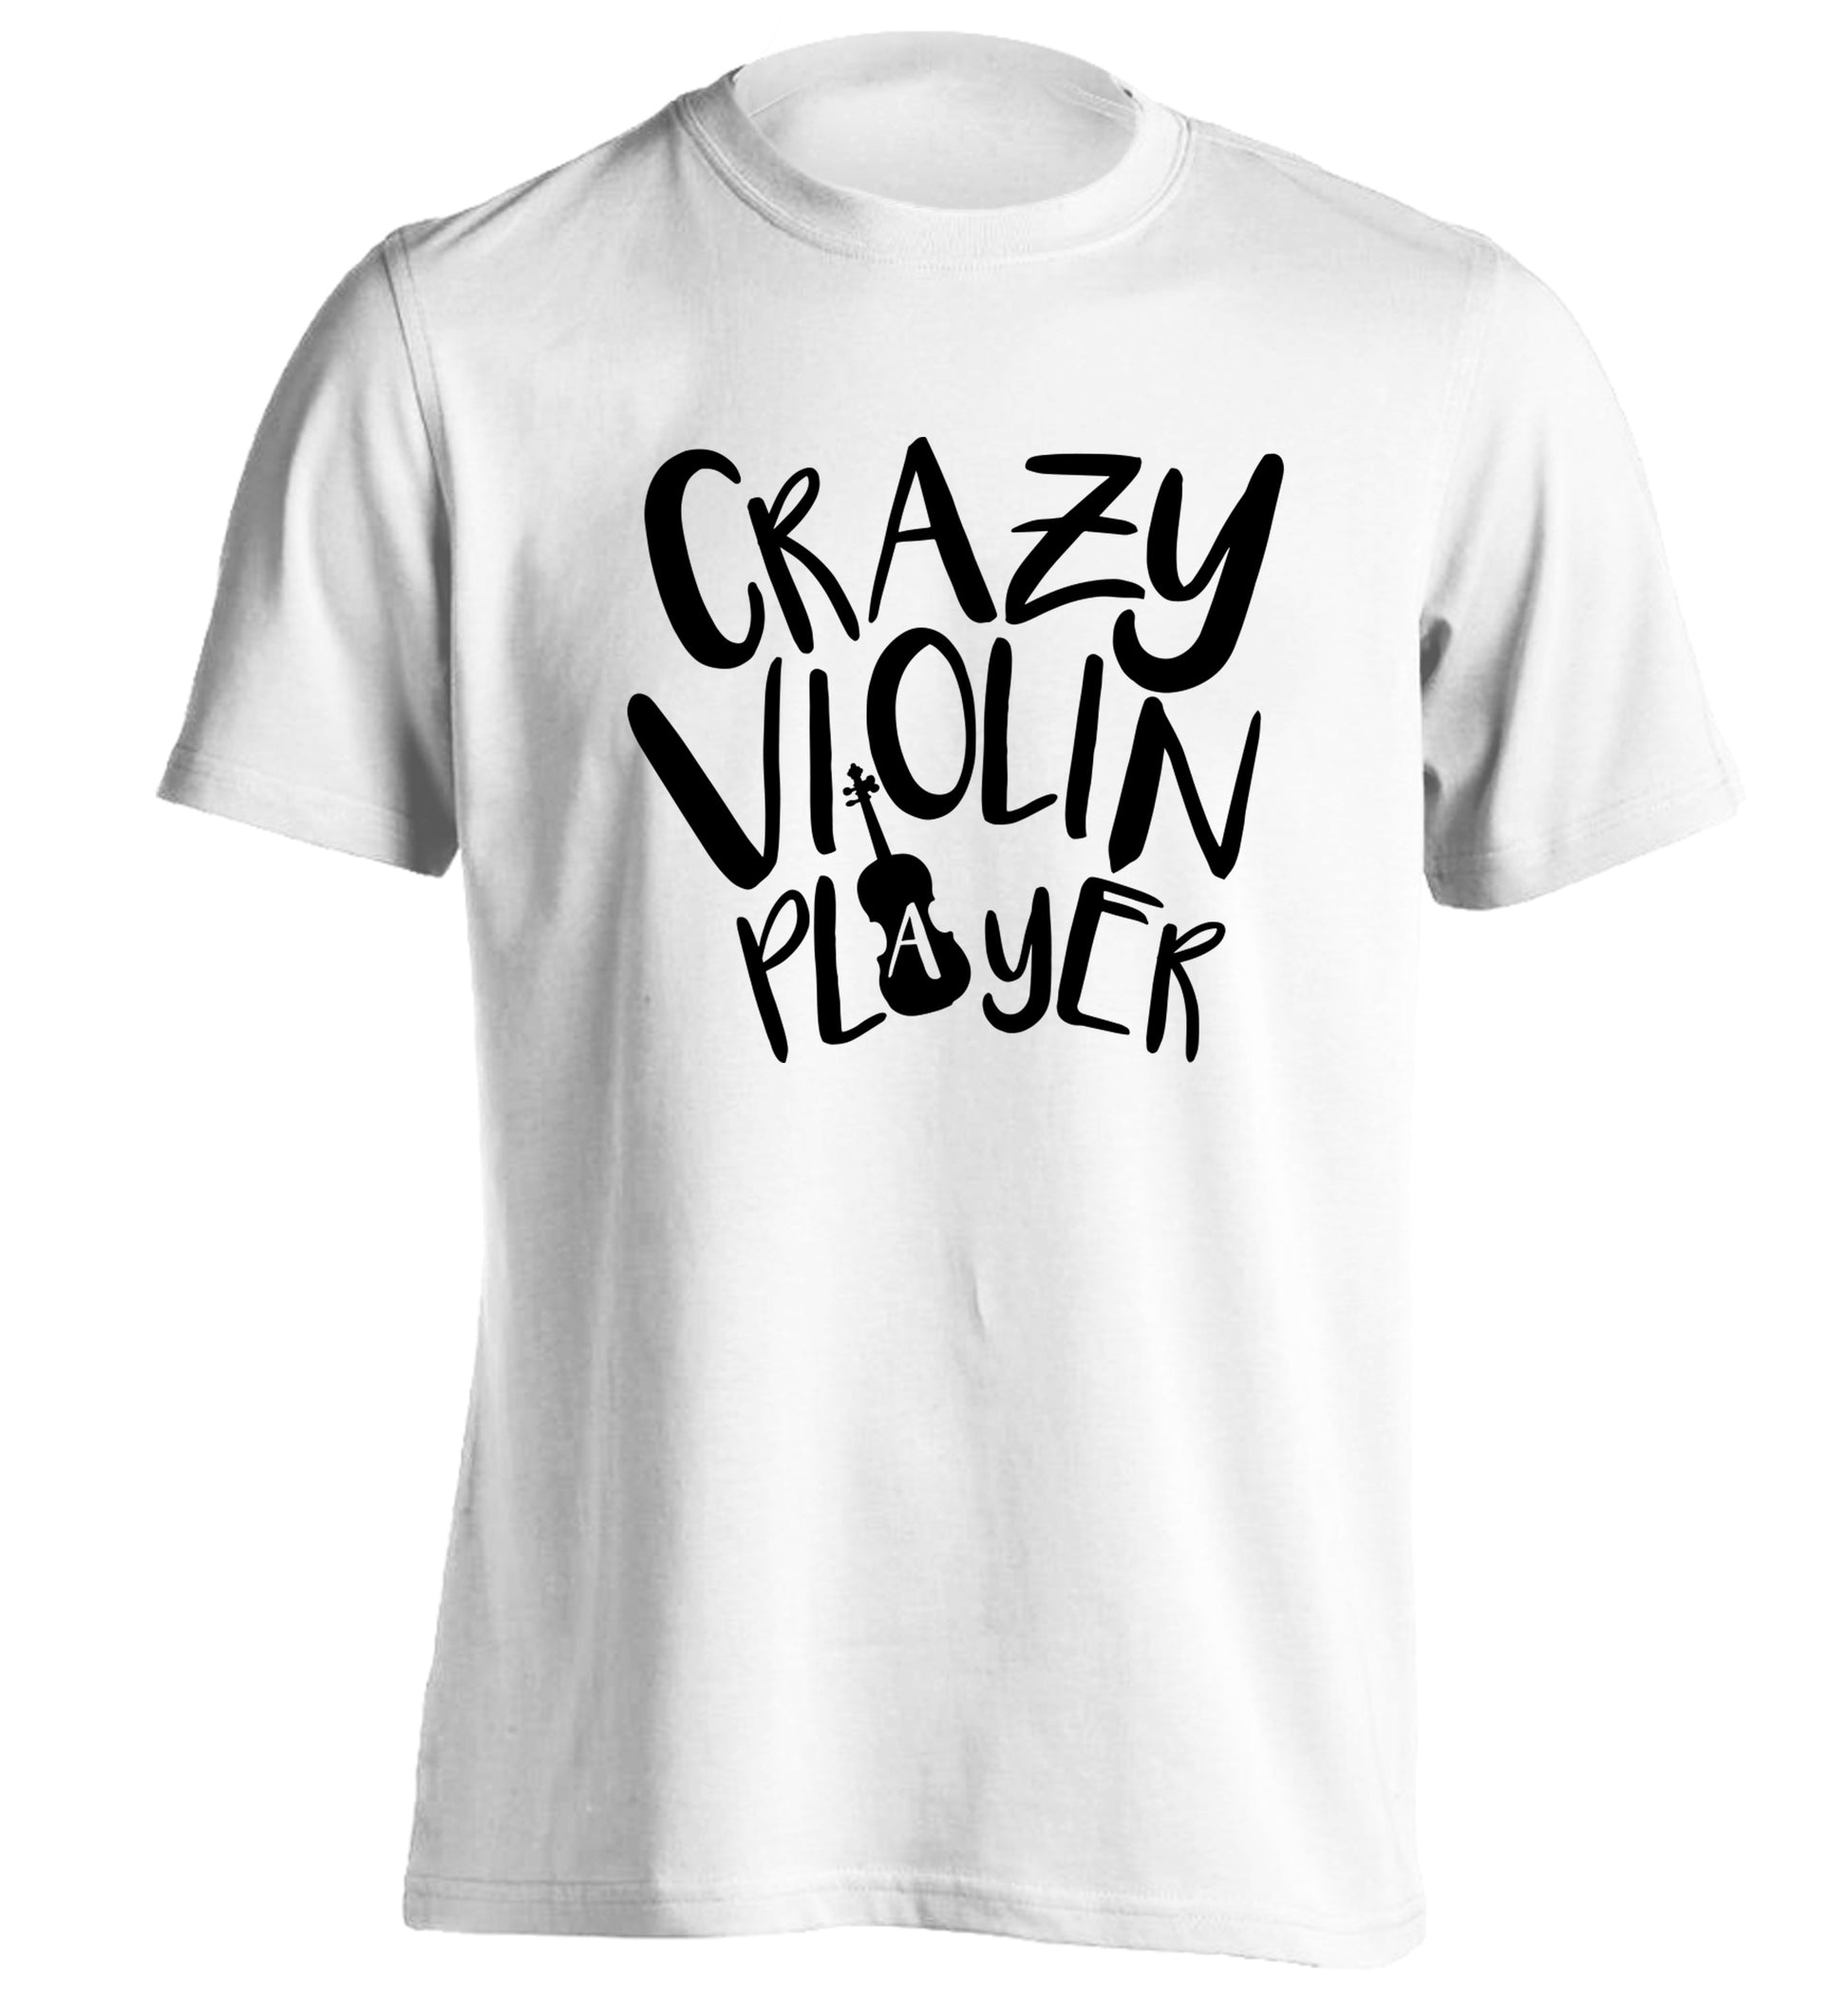 Crazy Violin Player adults unisex white Tshirt 2XL